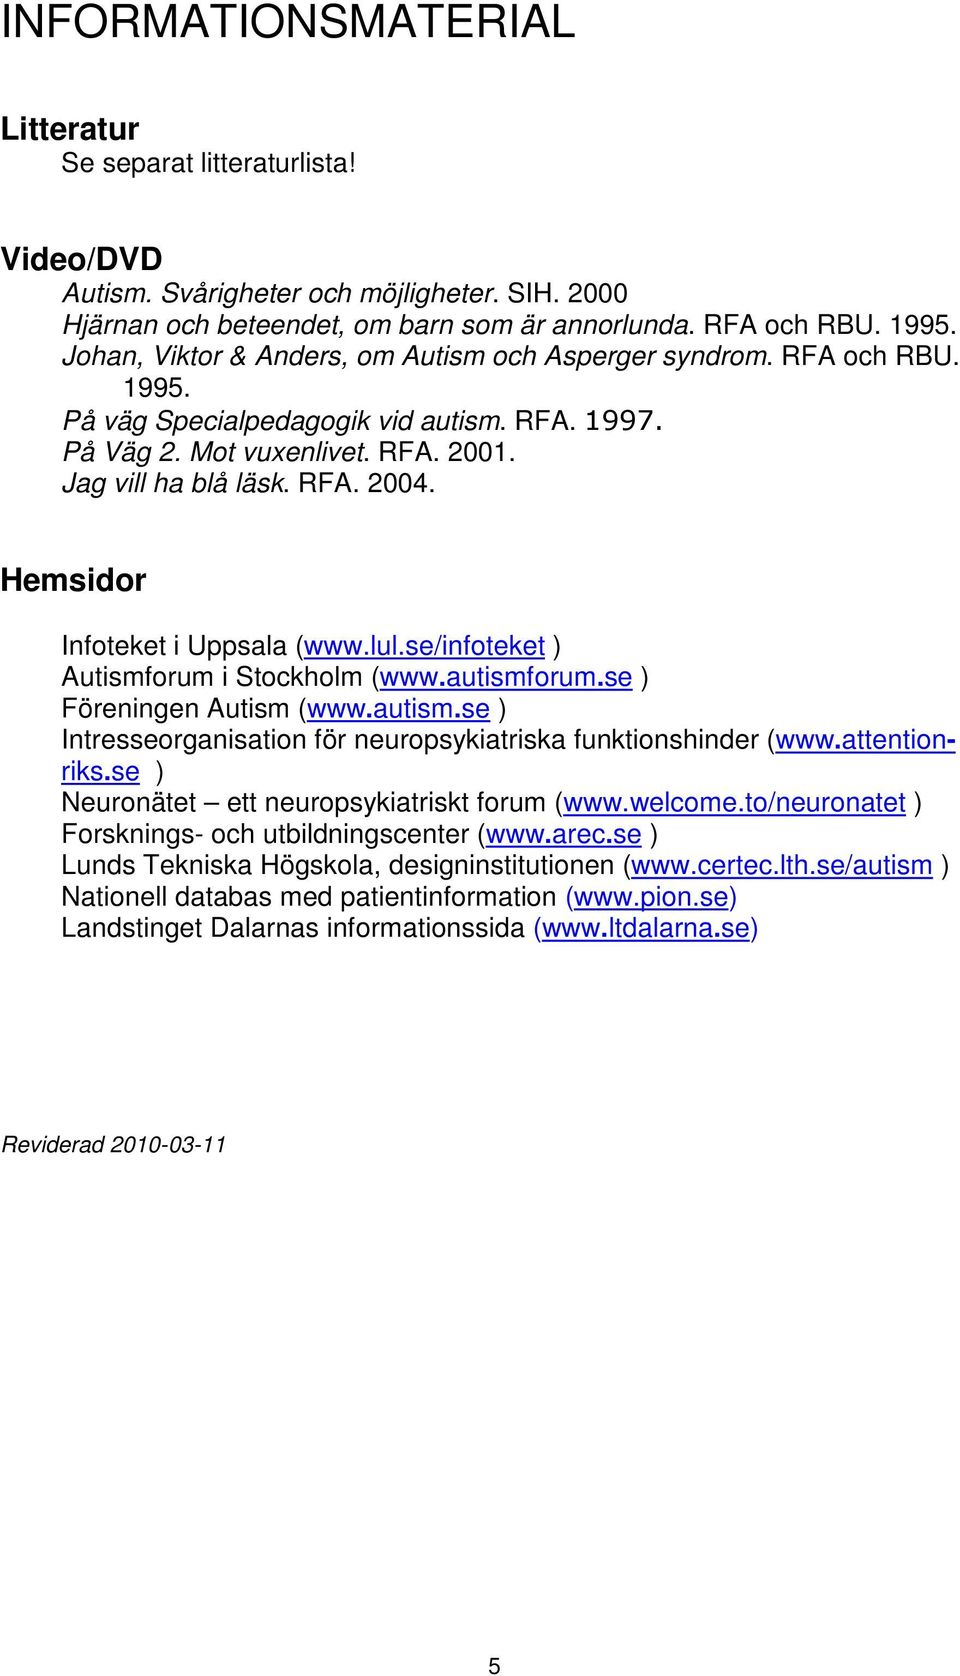 Hemsidor Infoteket i Uppsala (www.lul.se/infoteket ) Autismforum i Stockholm (www.autismforum.se ) Föreningen Autism (www.autism.se ) Intresseorganisation för neuropsykiatriska funktionshinder (www.